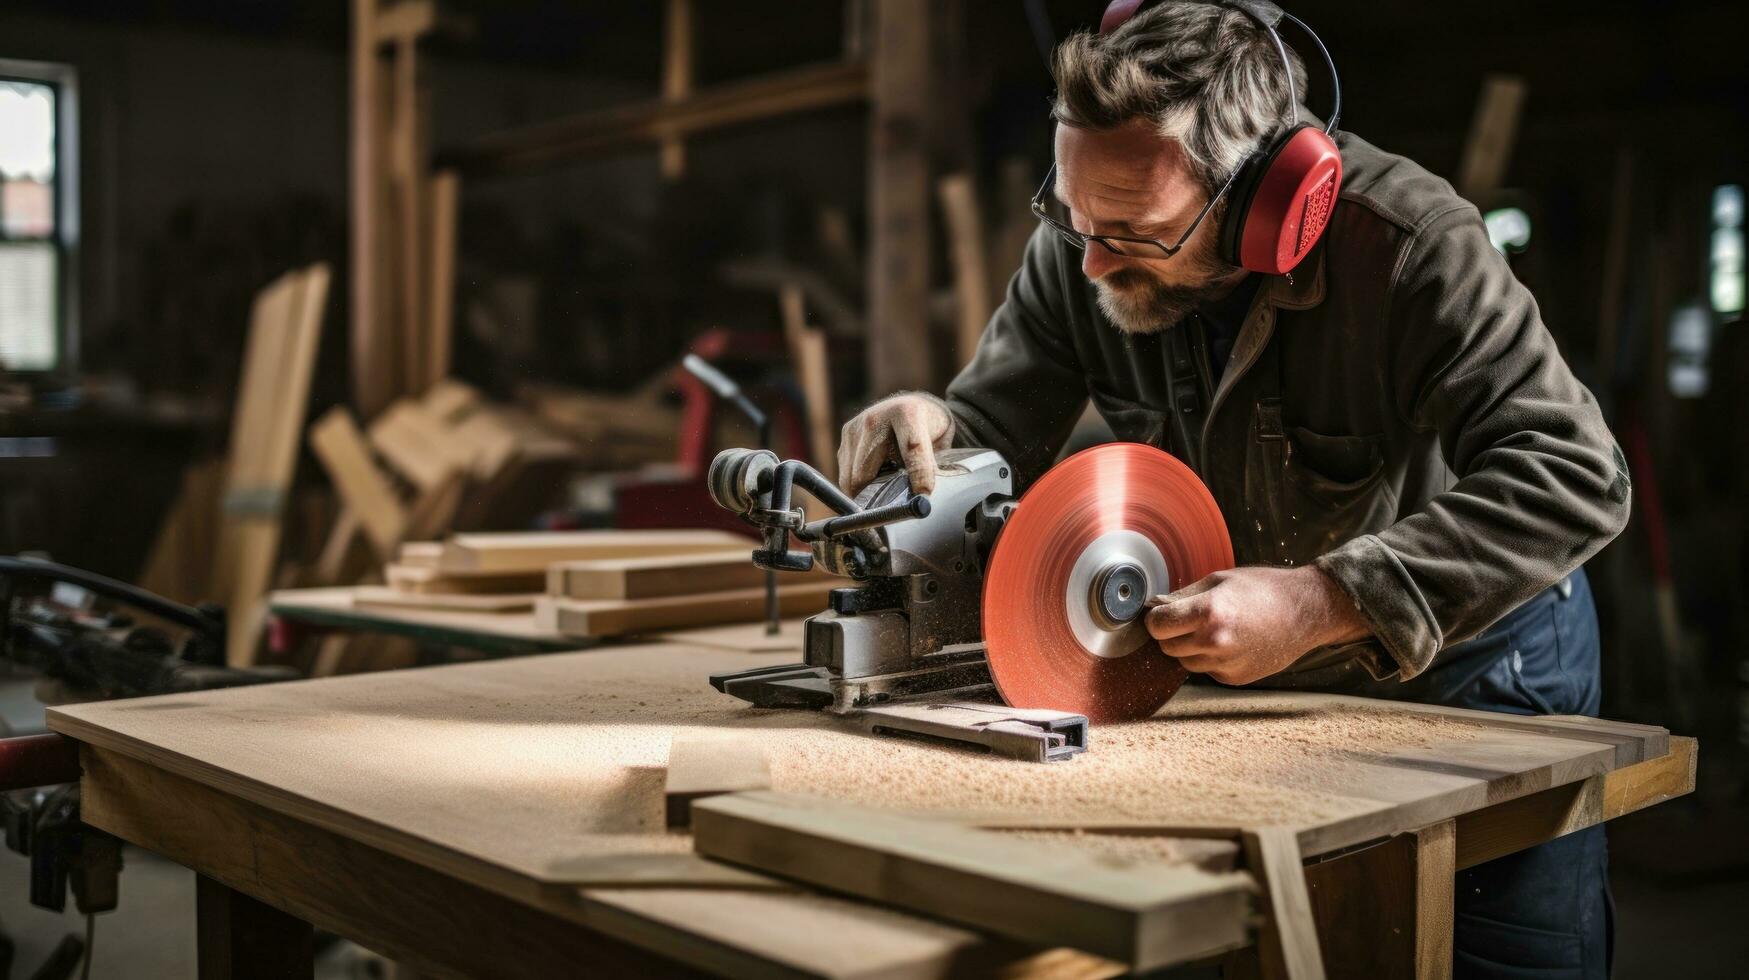 Carpenter cutting wood with a circular photo